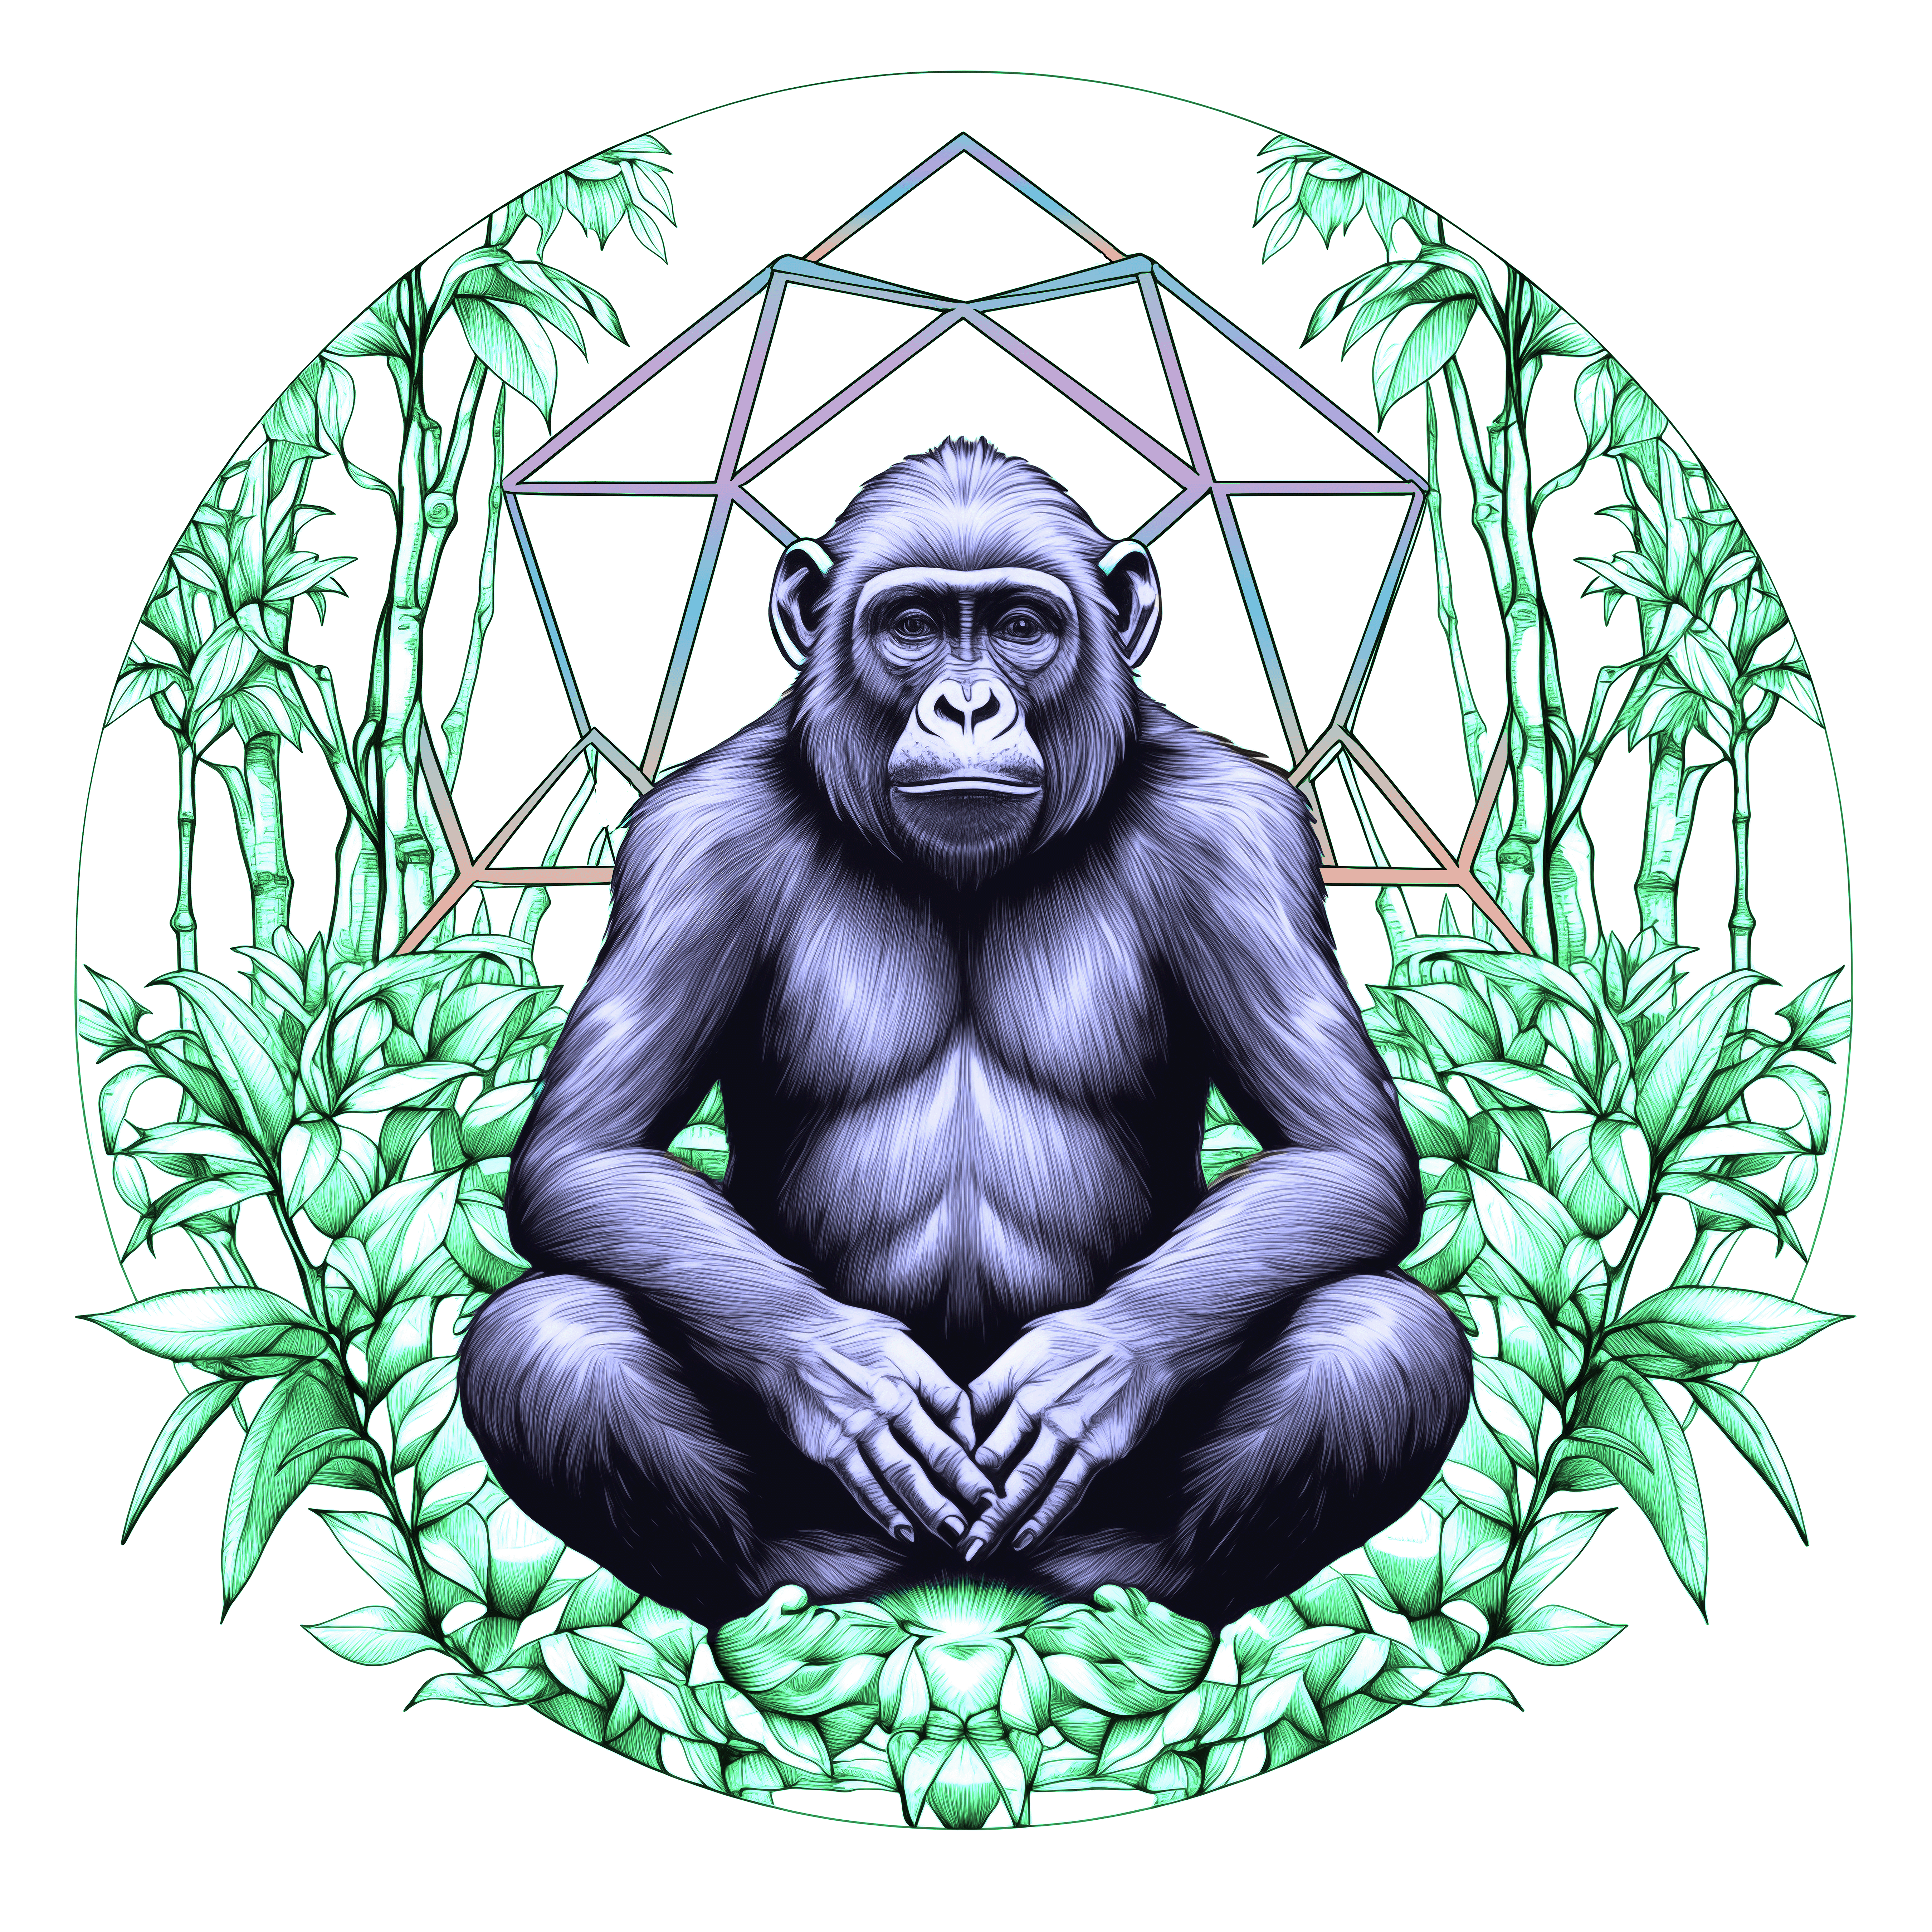 Enlightened Bonobos